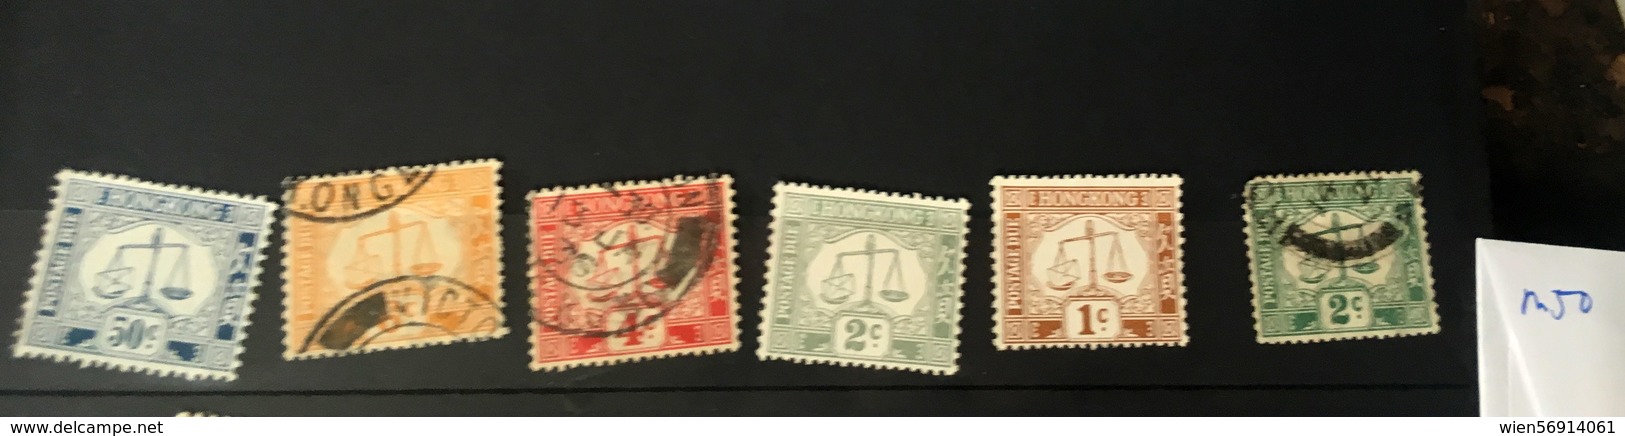 M50 Hong Kong Selection Porto - Stempelmarke Als Postmarke Verwendet